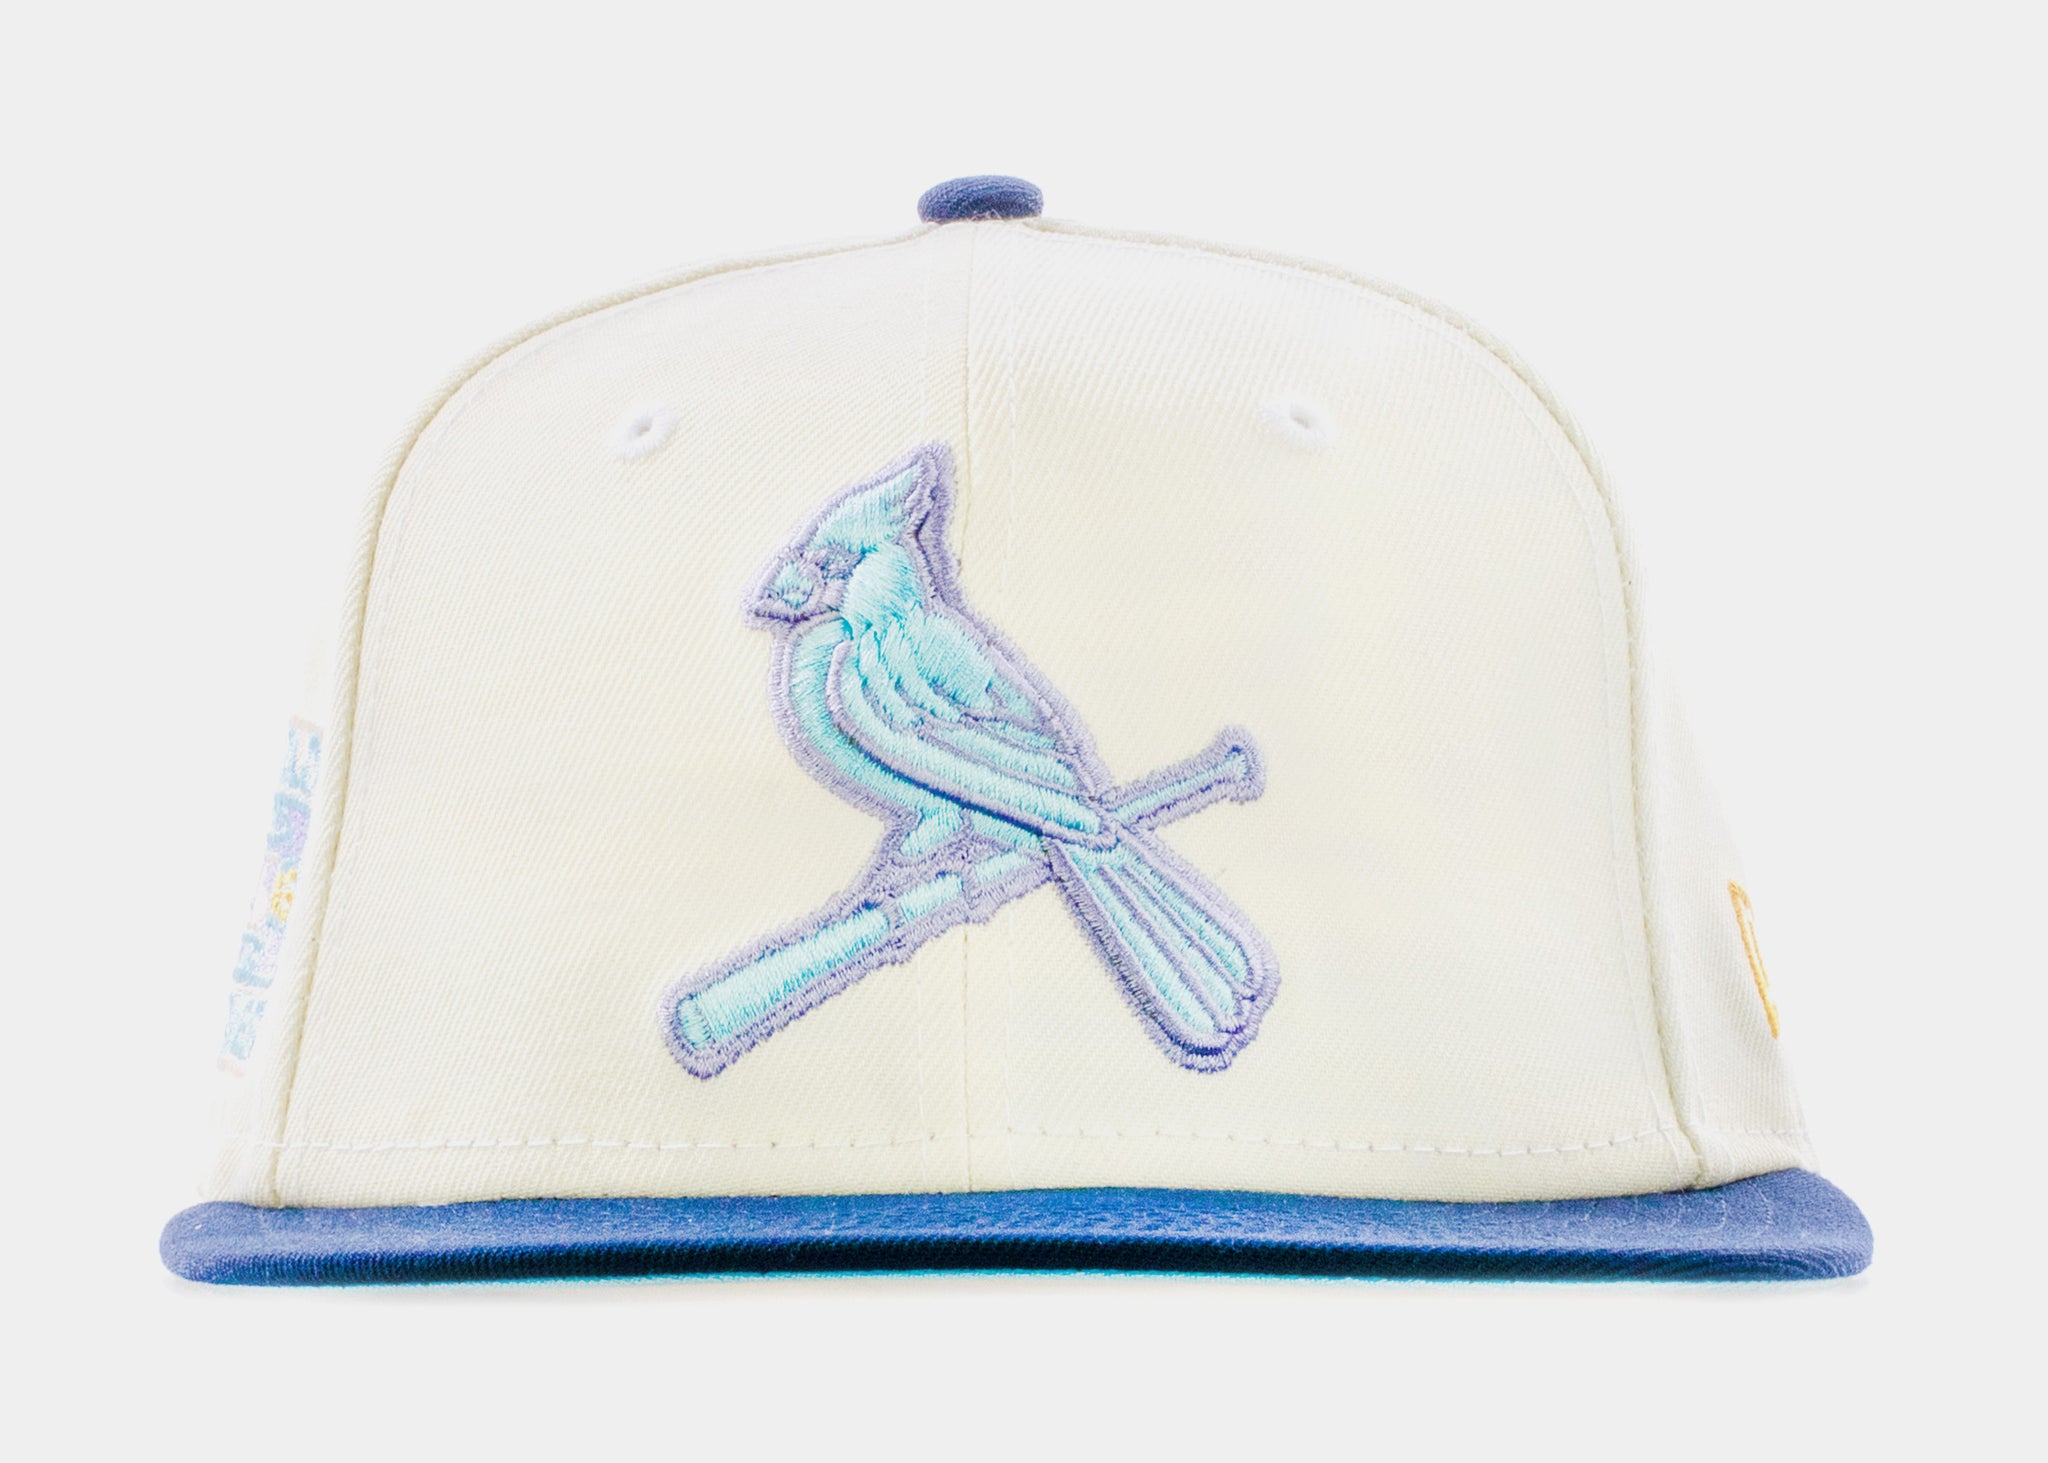 Men's St. Louis Cardinals New Era Light Blue 59FIFTY Fitted Hat